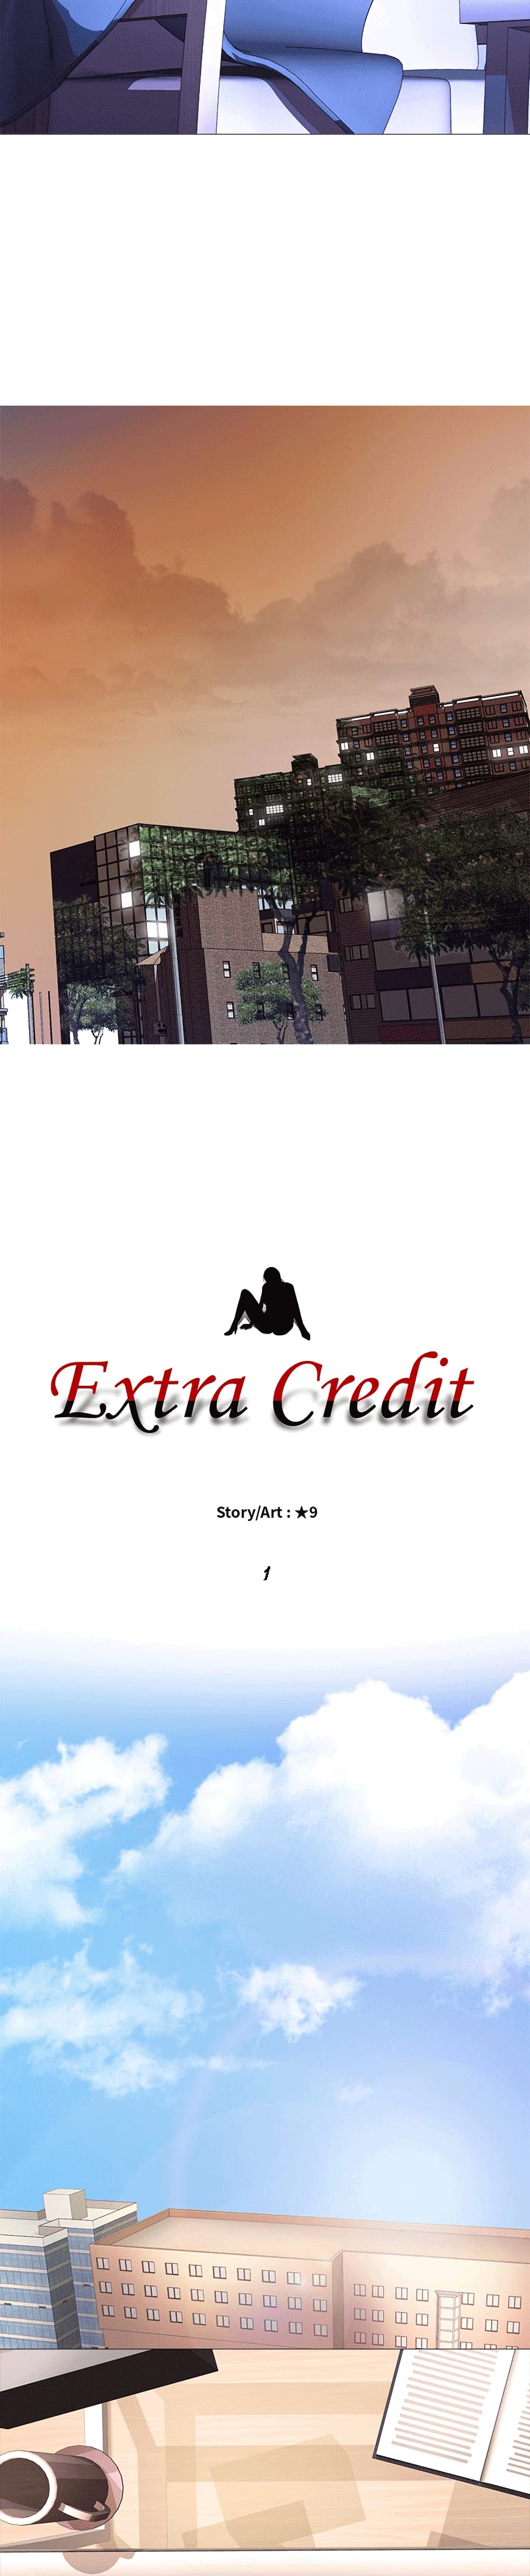 Extra Credit 1-1